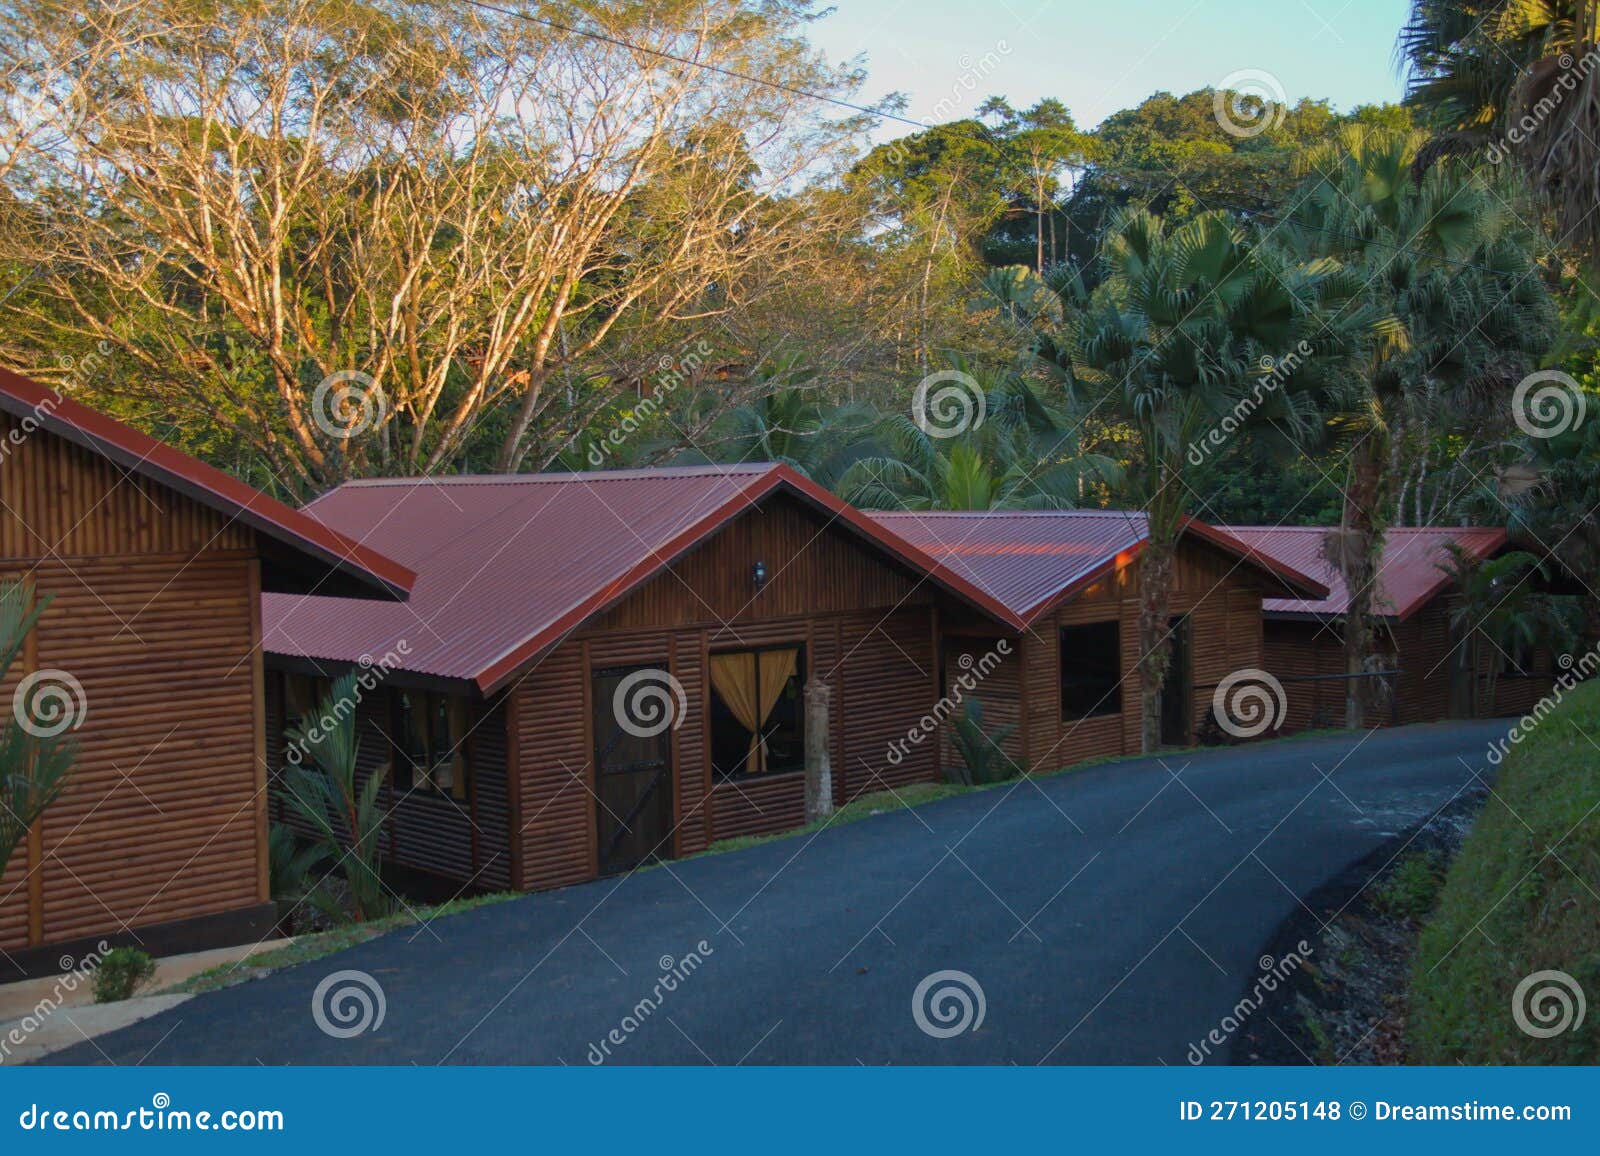 bungalows in pedacito de cielo near boca tapada in costa rica